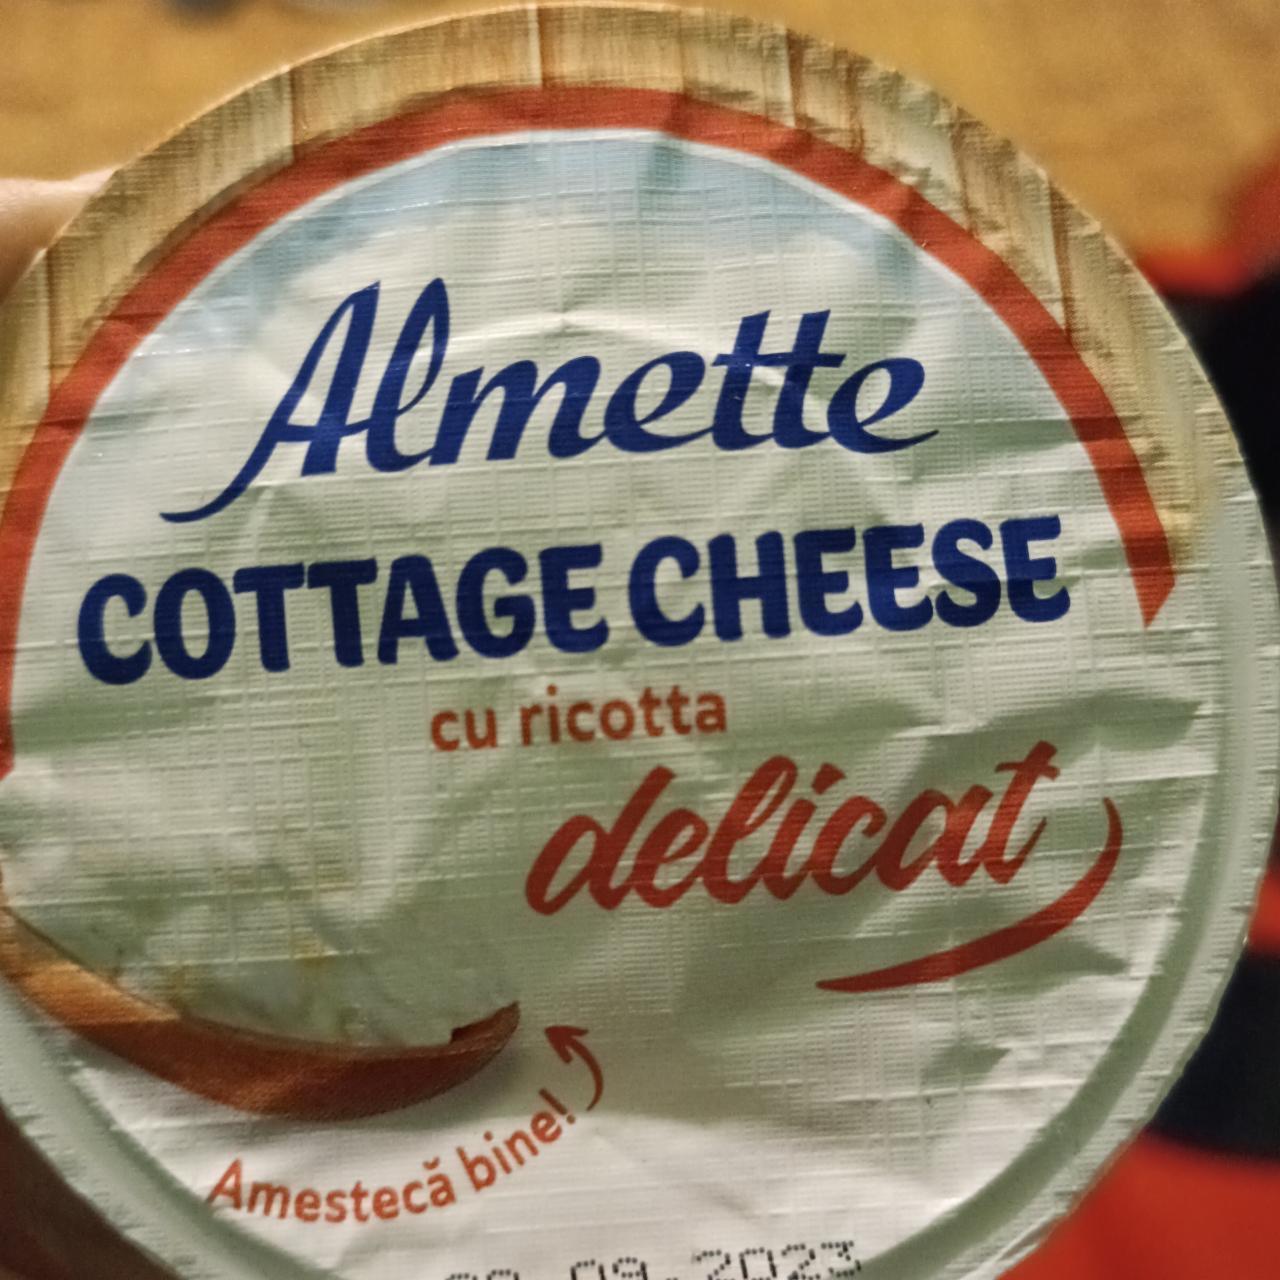 Képek - Cottage cheese cu ricotta Almette